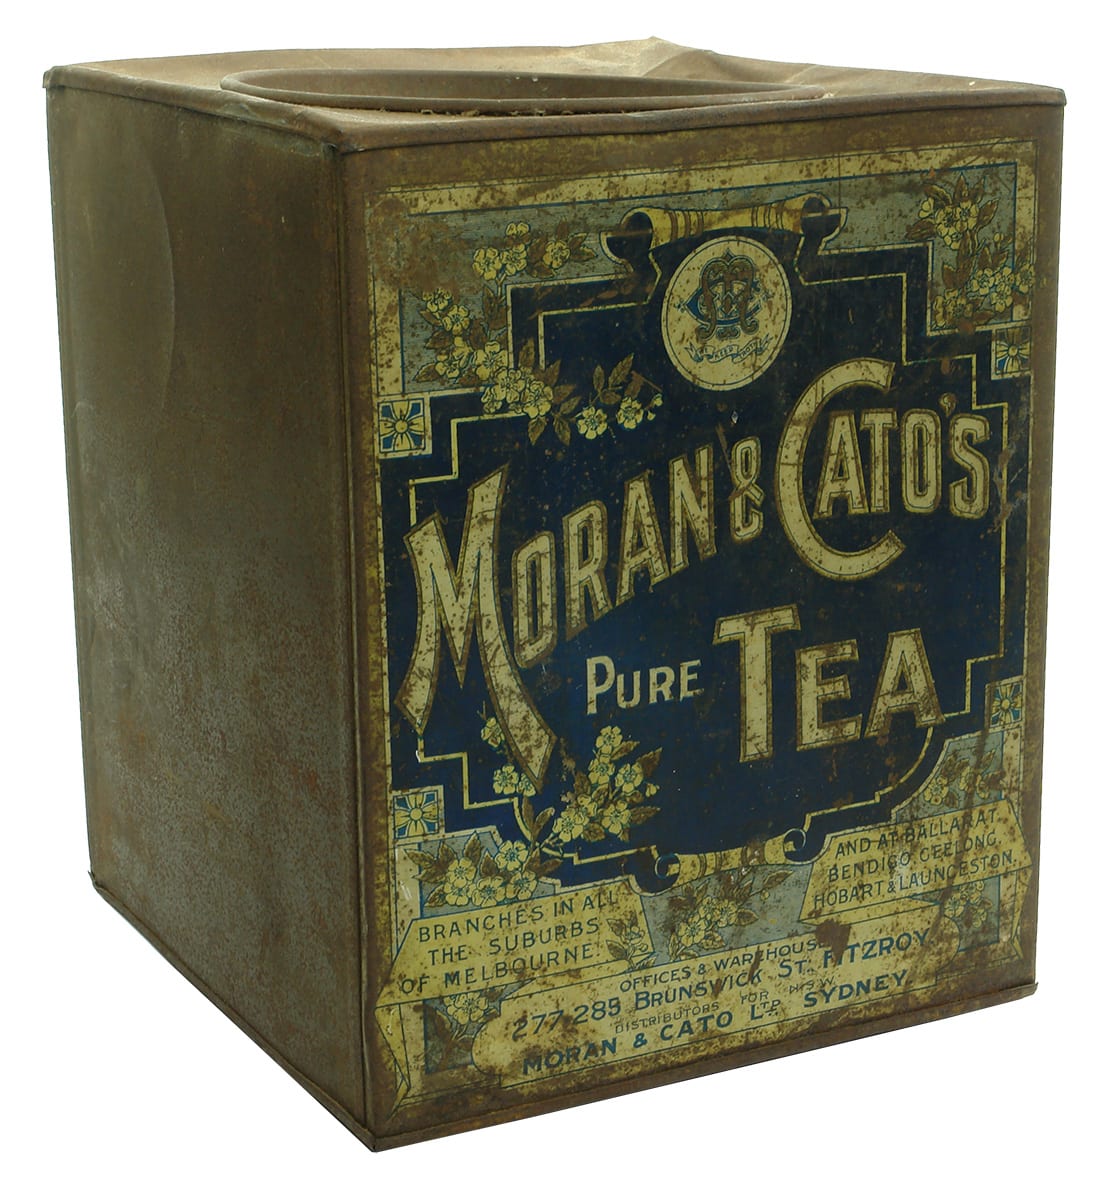 Moran and Cato's Tea Tin